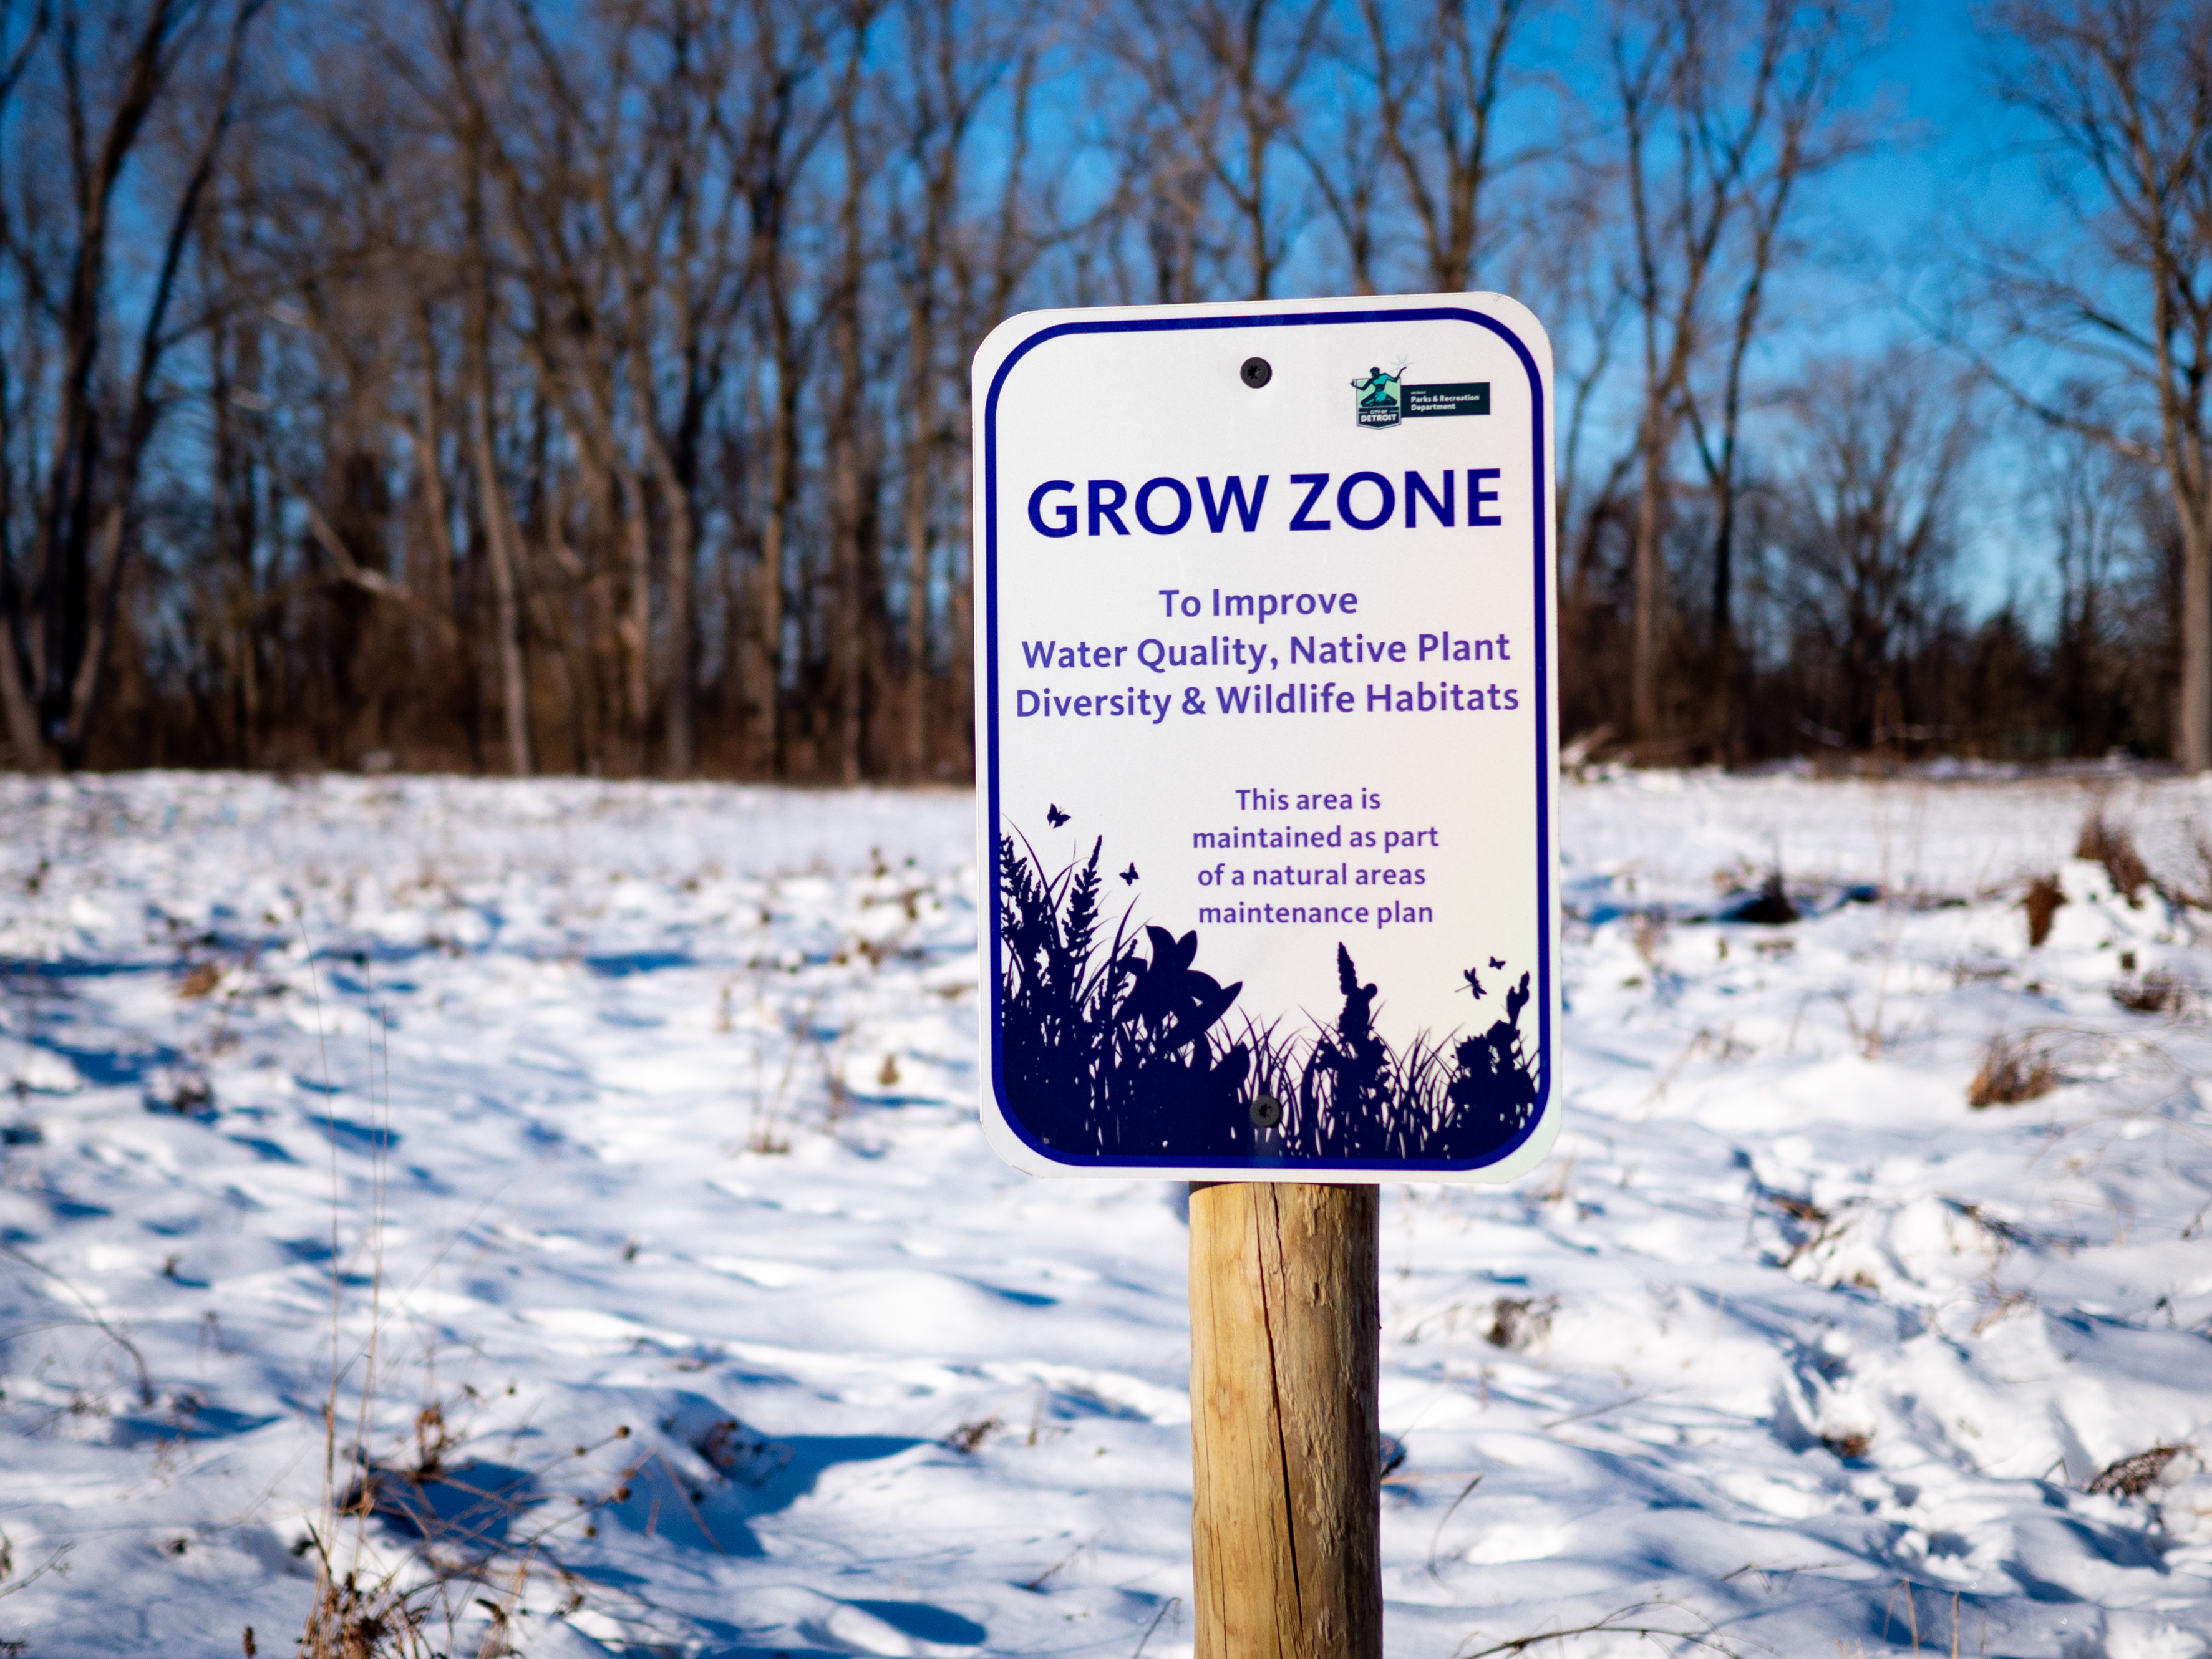 Grow Zone sign photo by Nicholas Hinnant